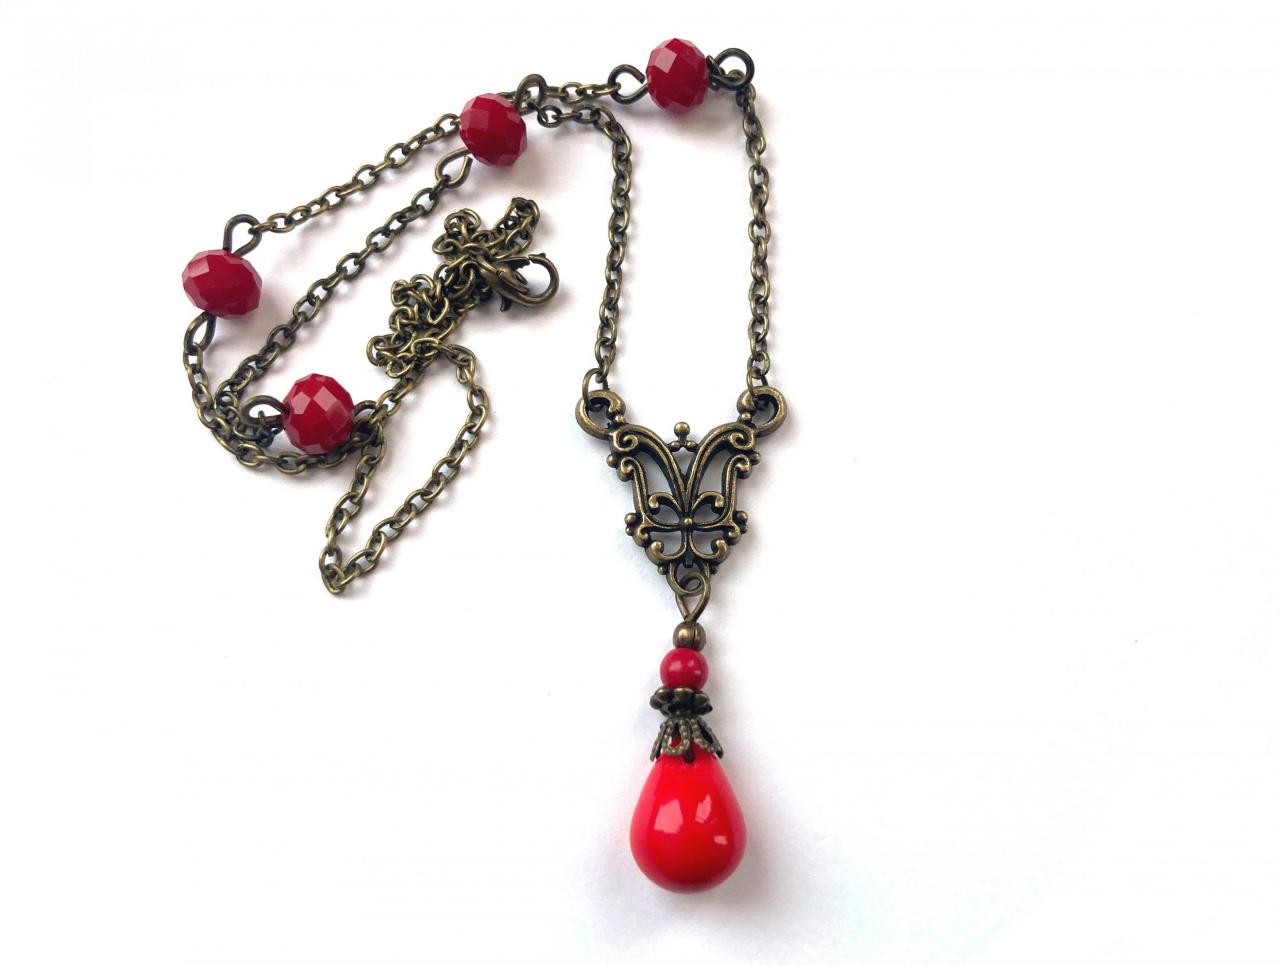 Art Nouveau Necklace With A Red Teardrop Glass Pendant, Selma Dreams